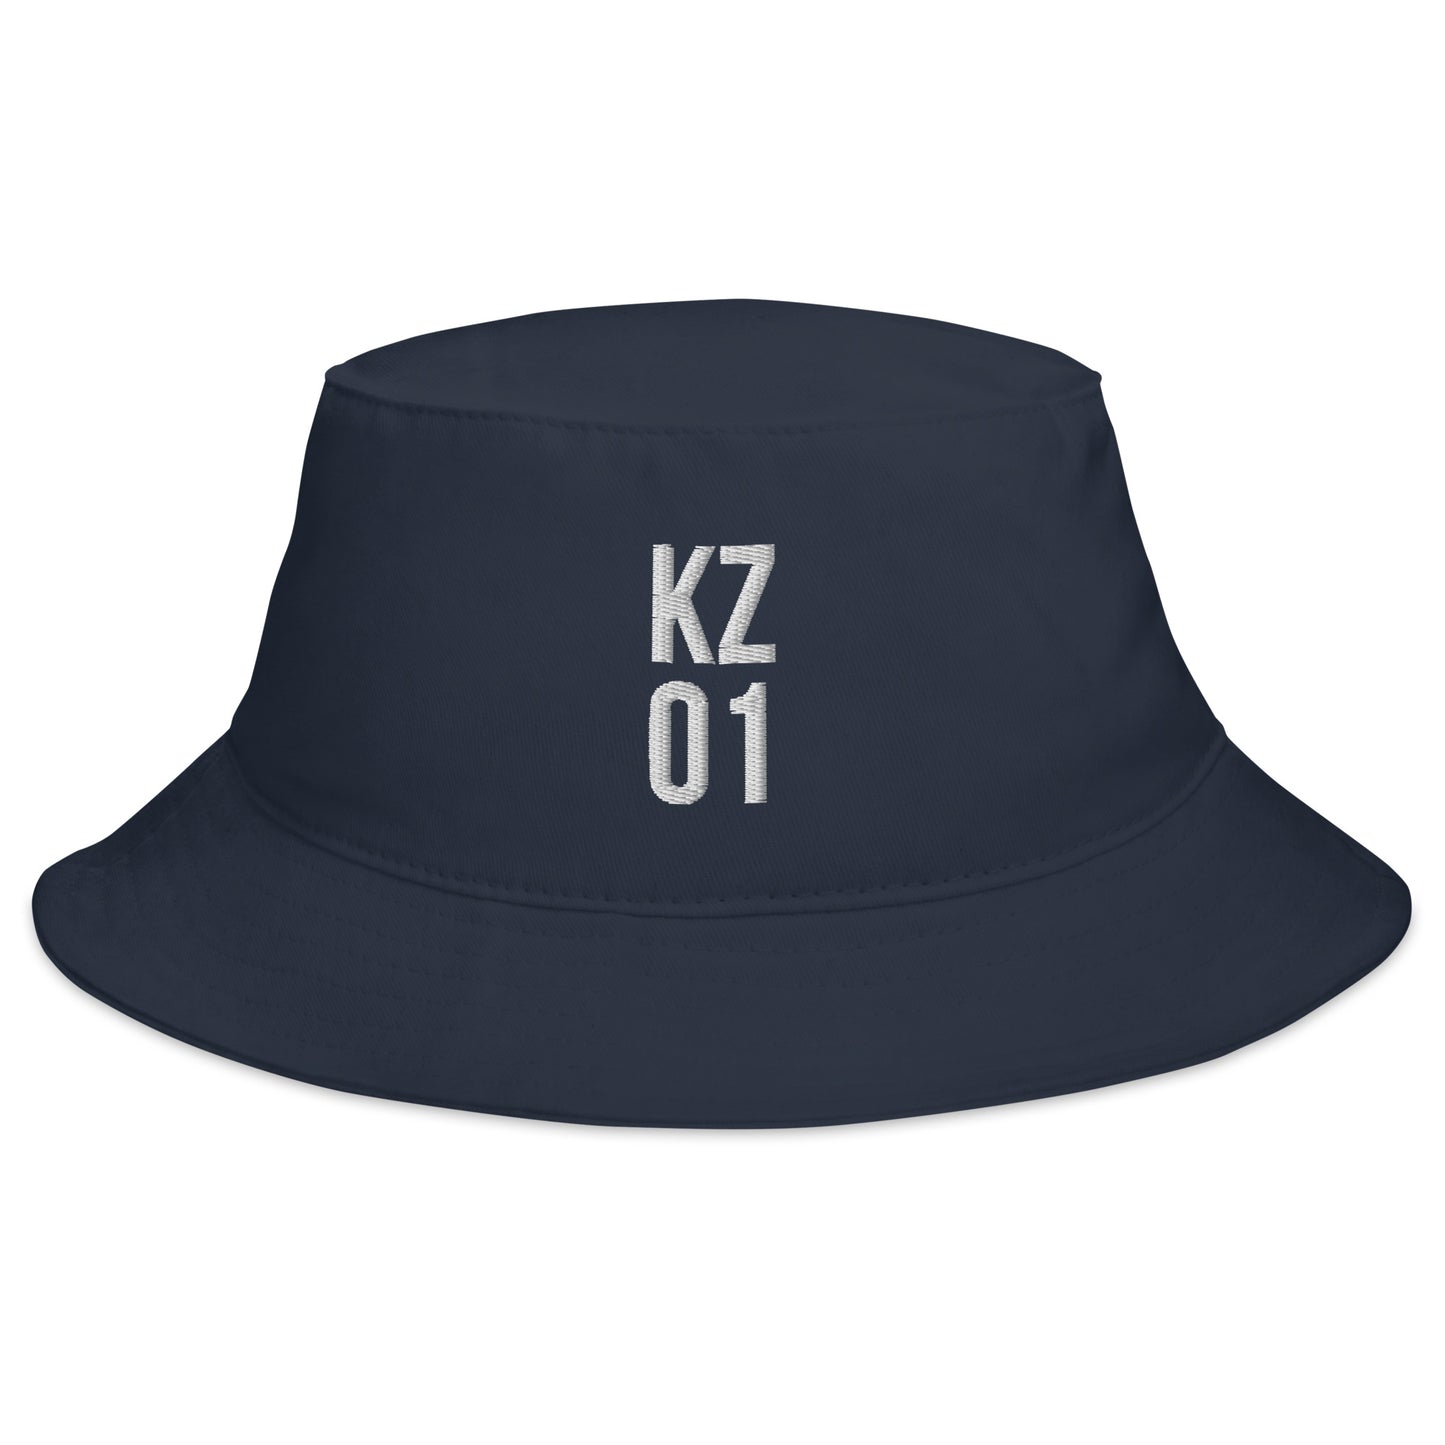 KZ 01 Bucket Hat